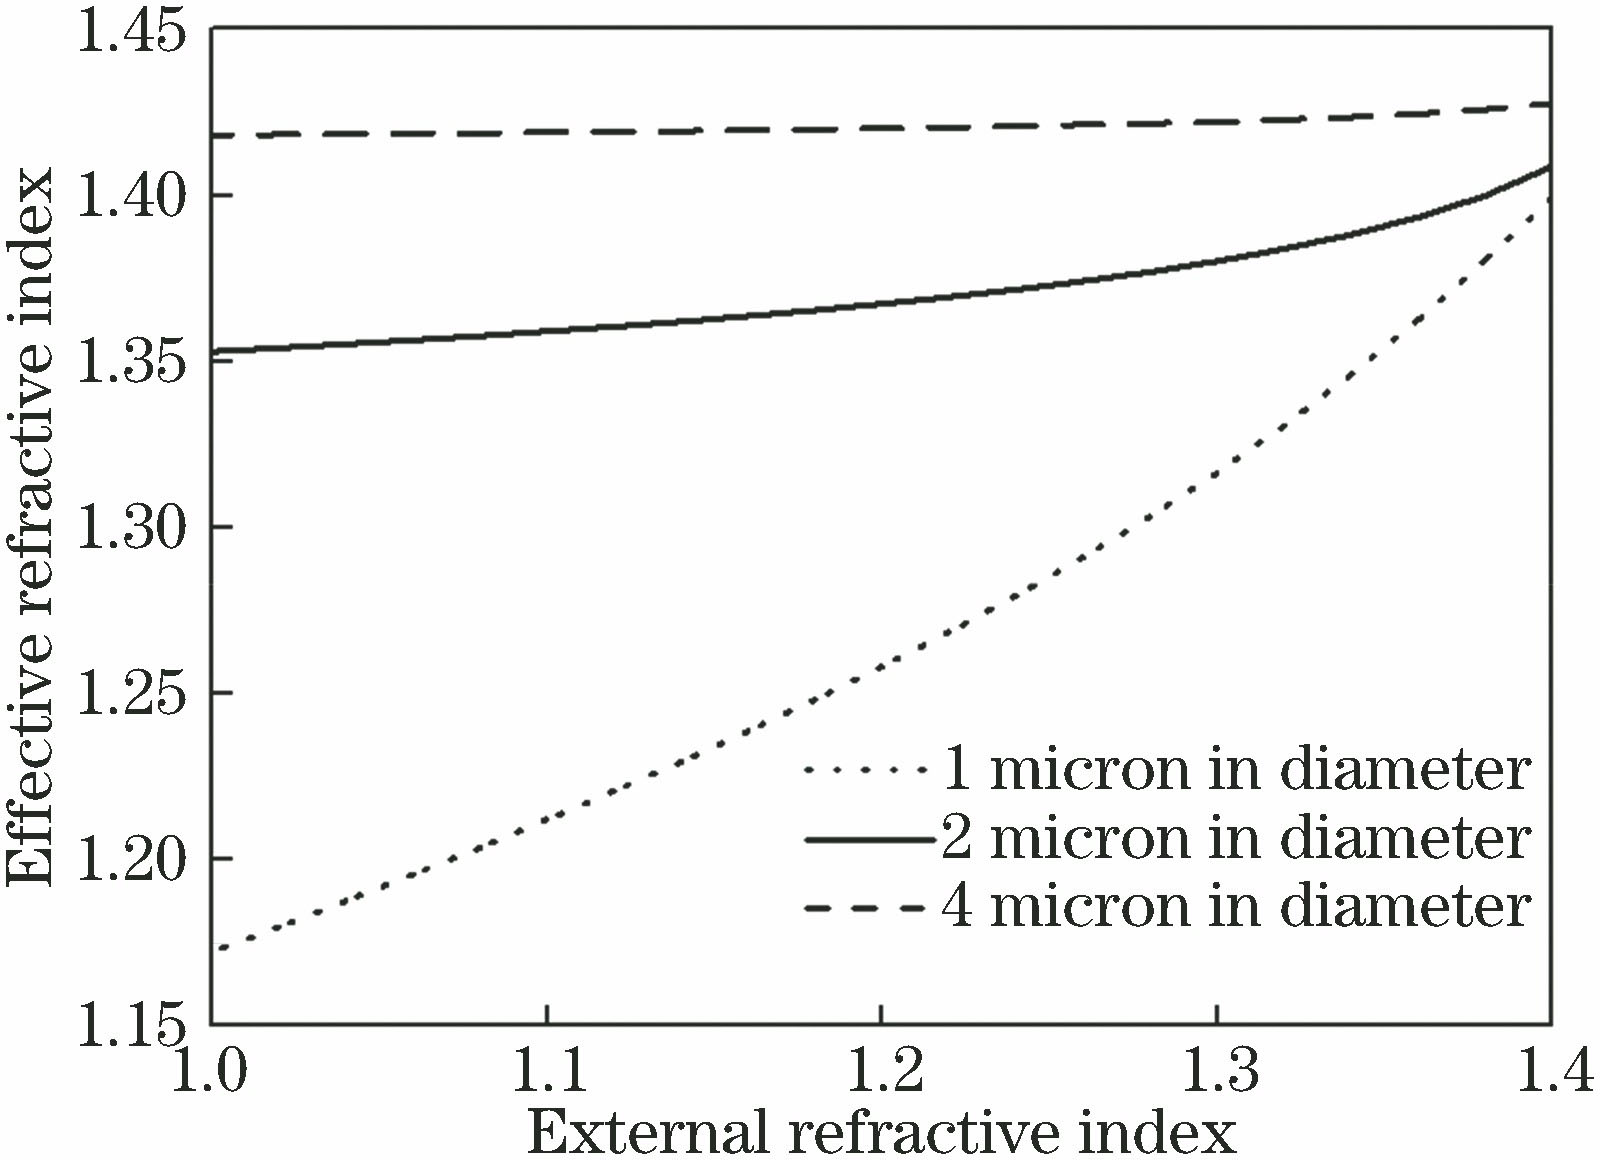 Relationship between effective refractive index of micro-nano fibers and external refractive index with different diameters